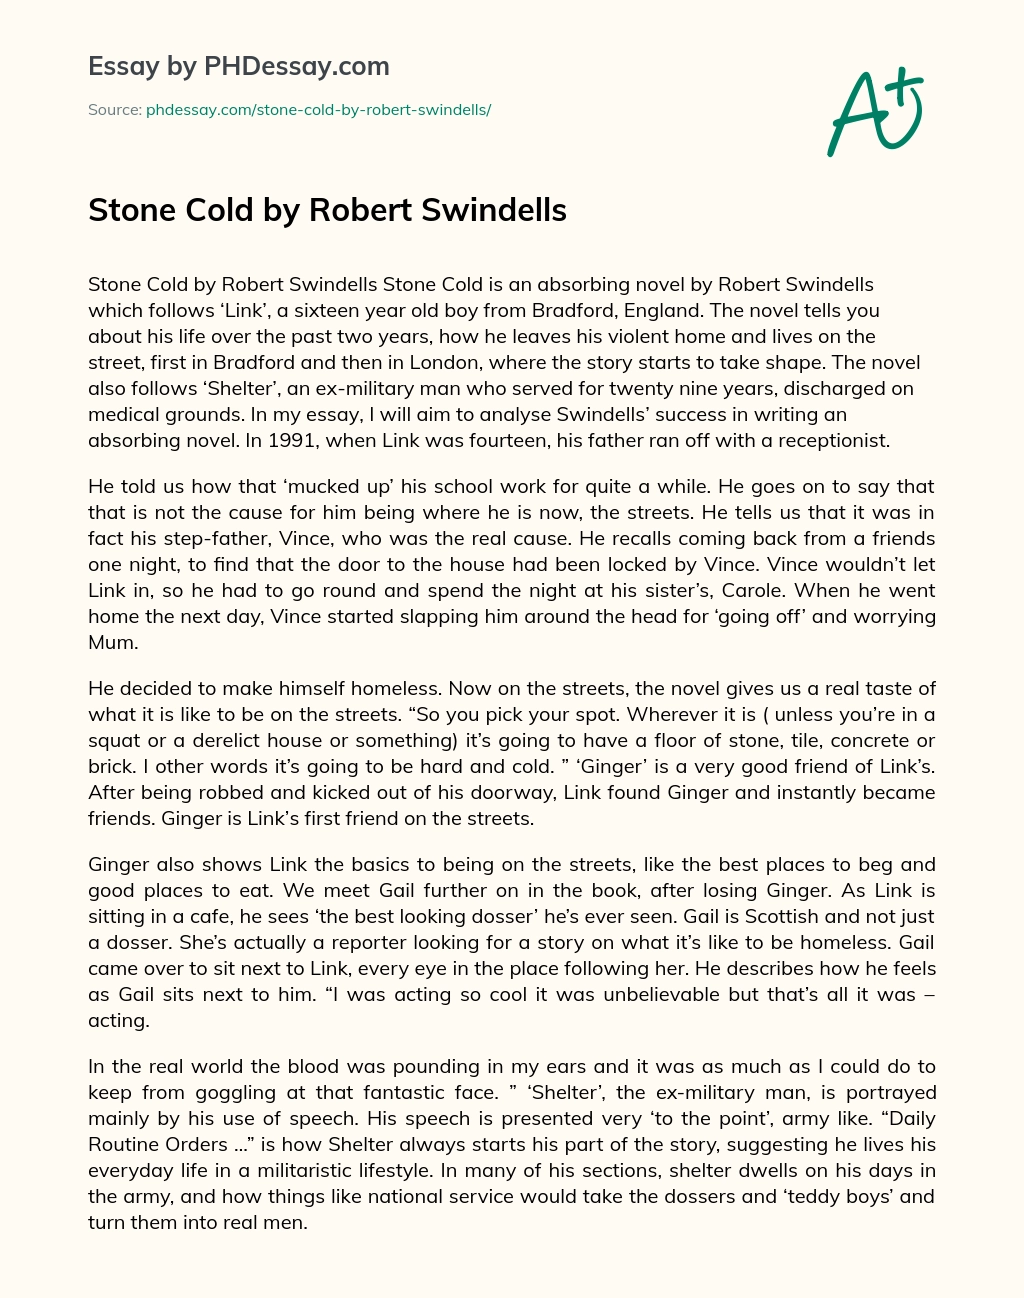 Stone Cold by Robert Swindells essay